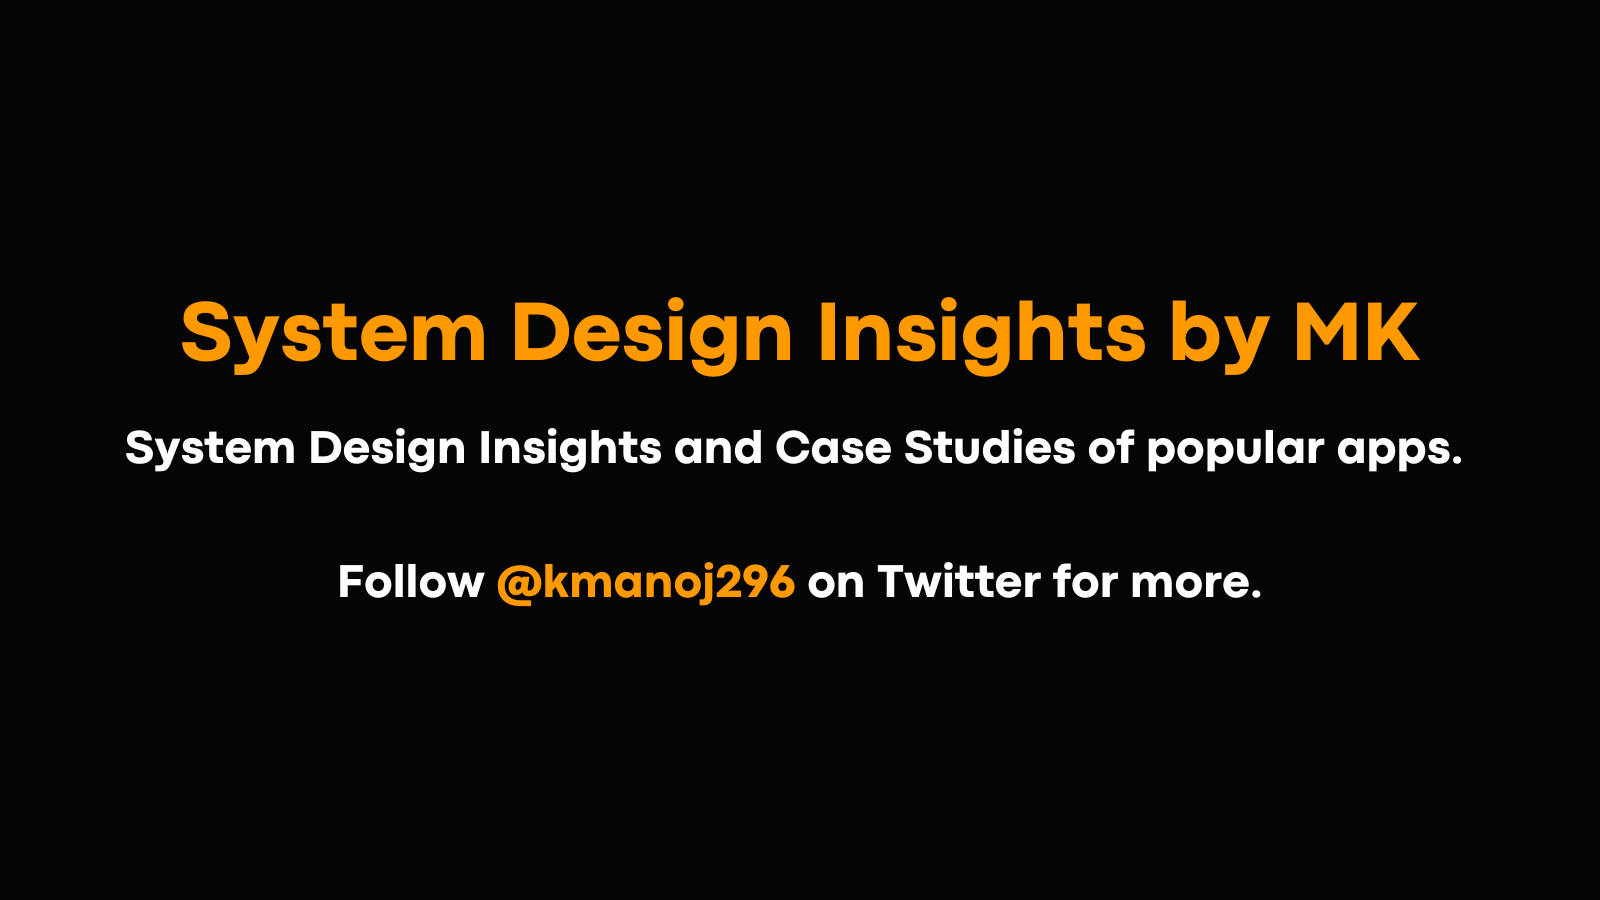 System Design Insights by MK